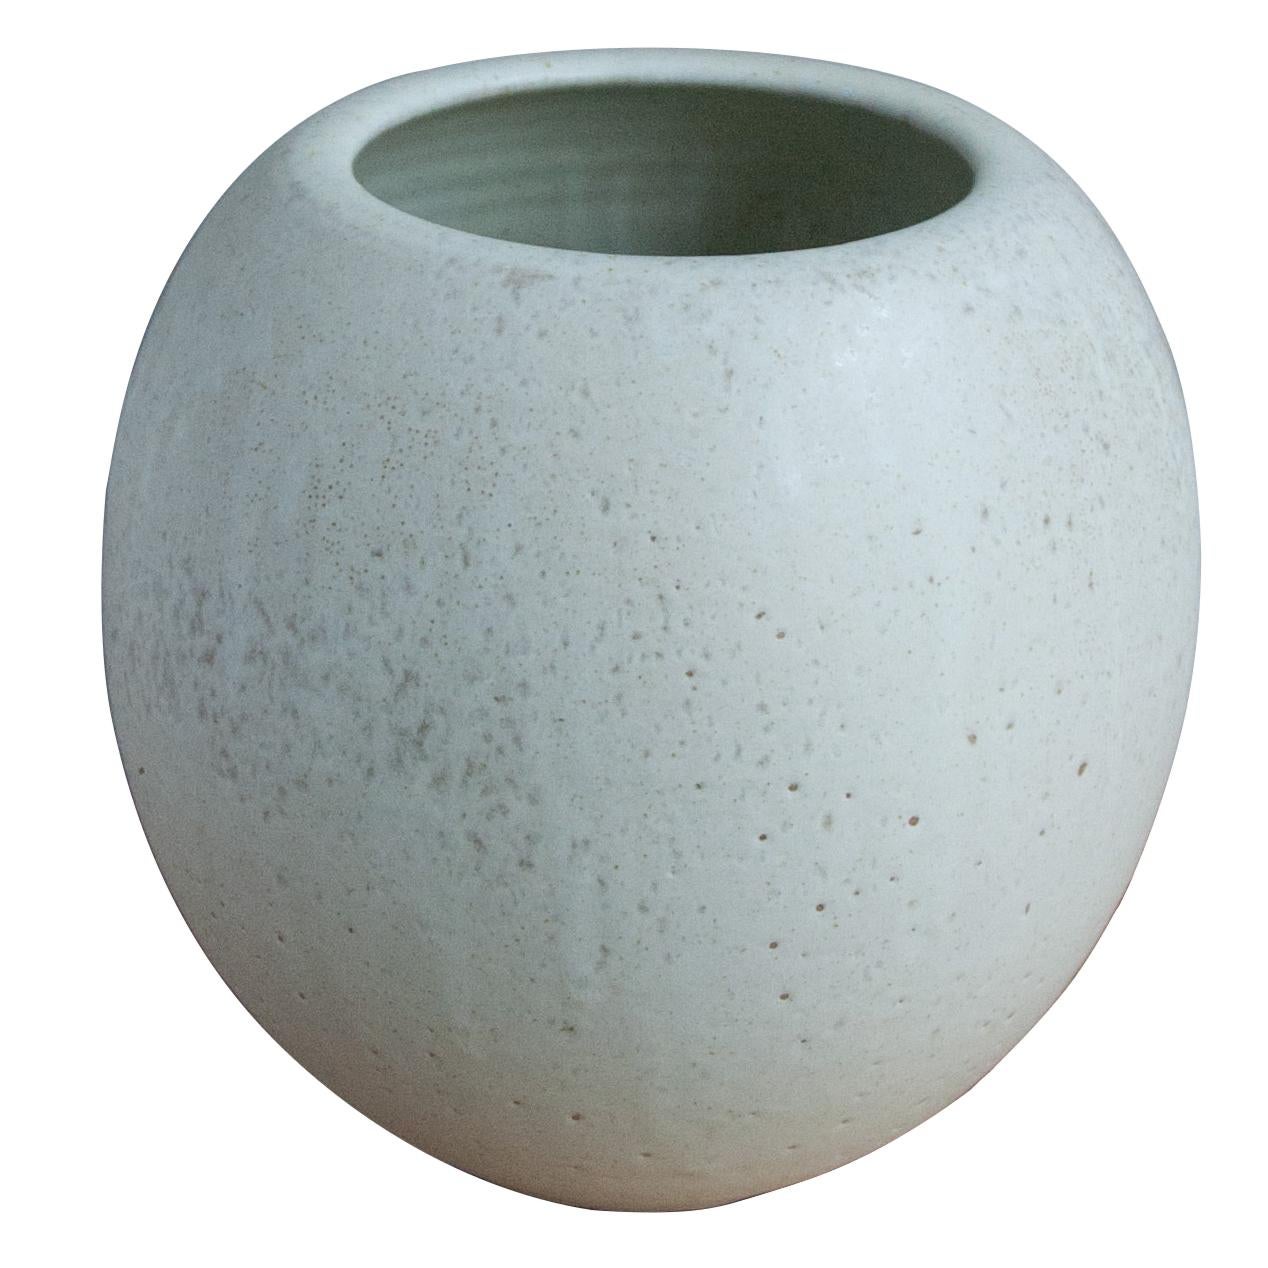 Aage & Kasper Würtz One off Bulbous Vase off White Glaze